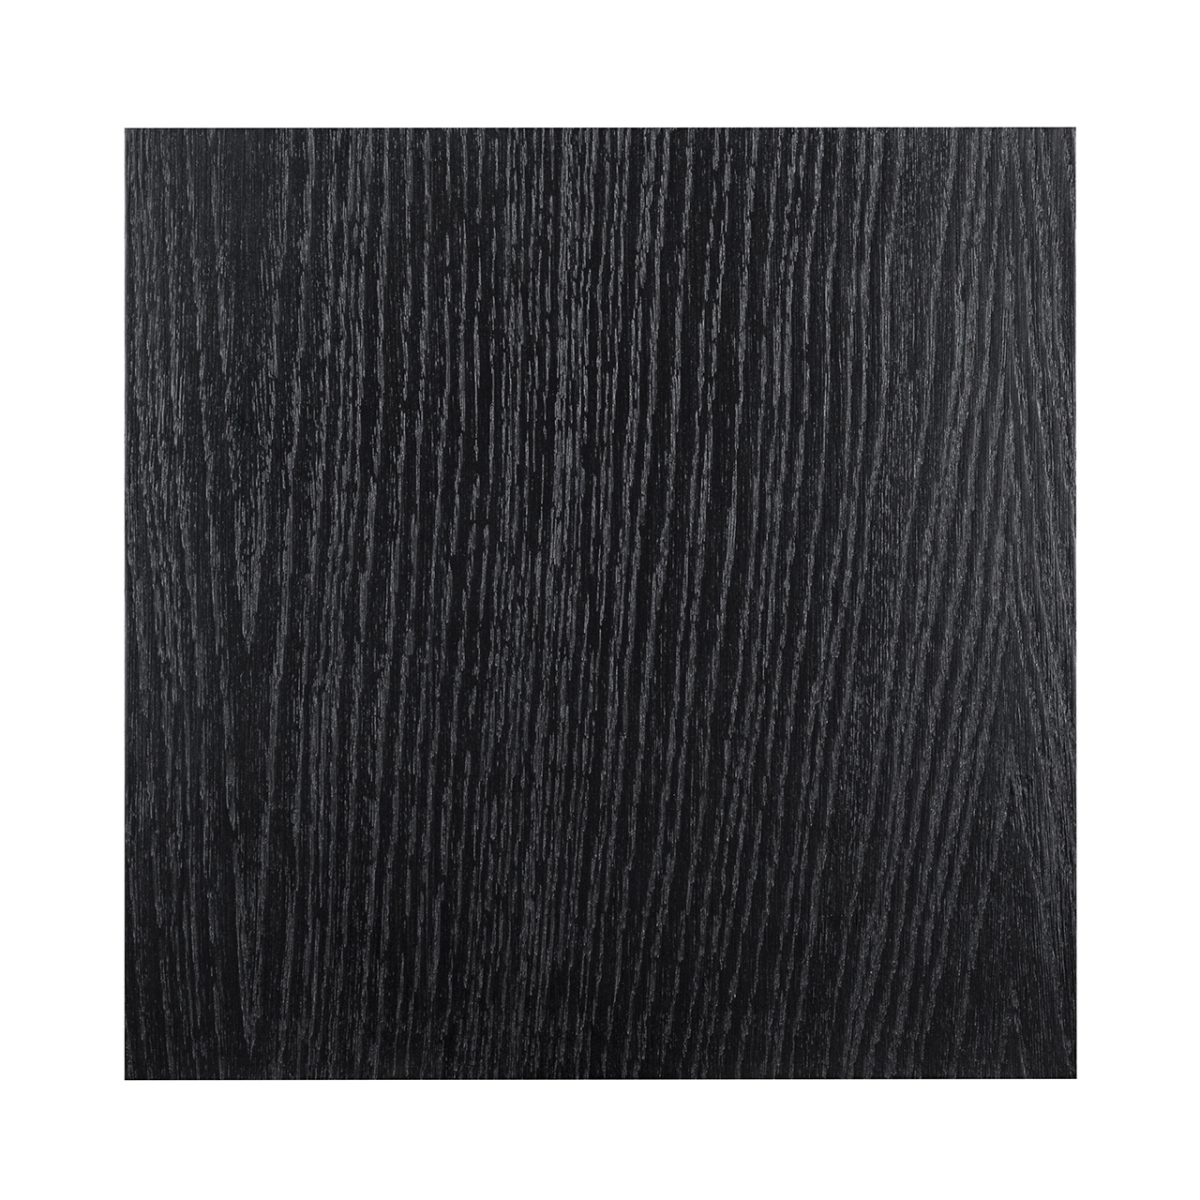 6518 BLACK - Pilaar Oakura (Black)